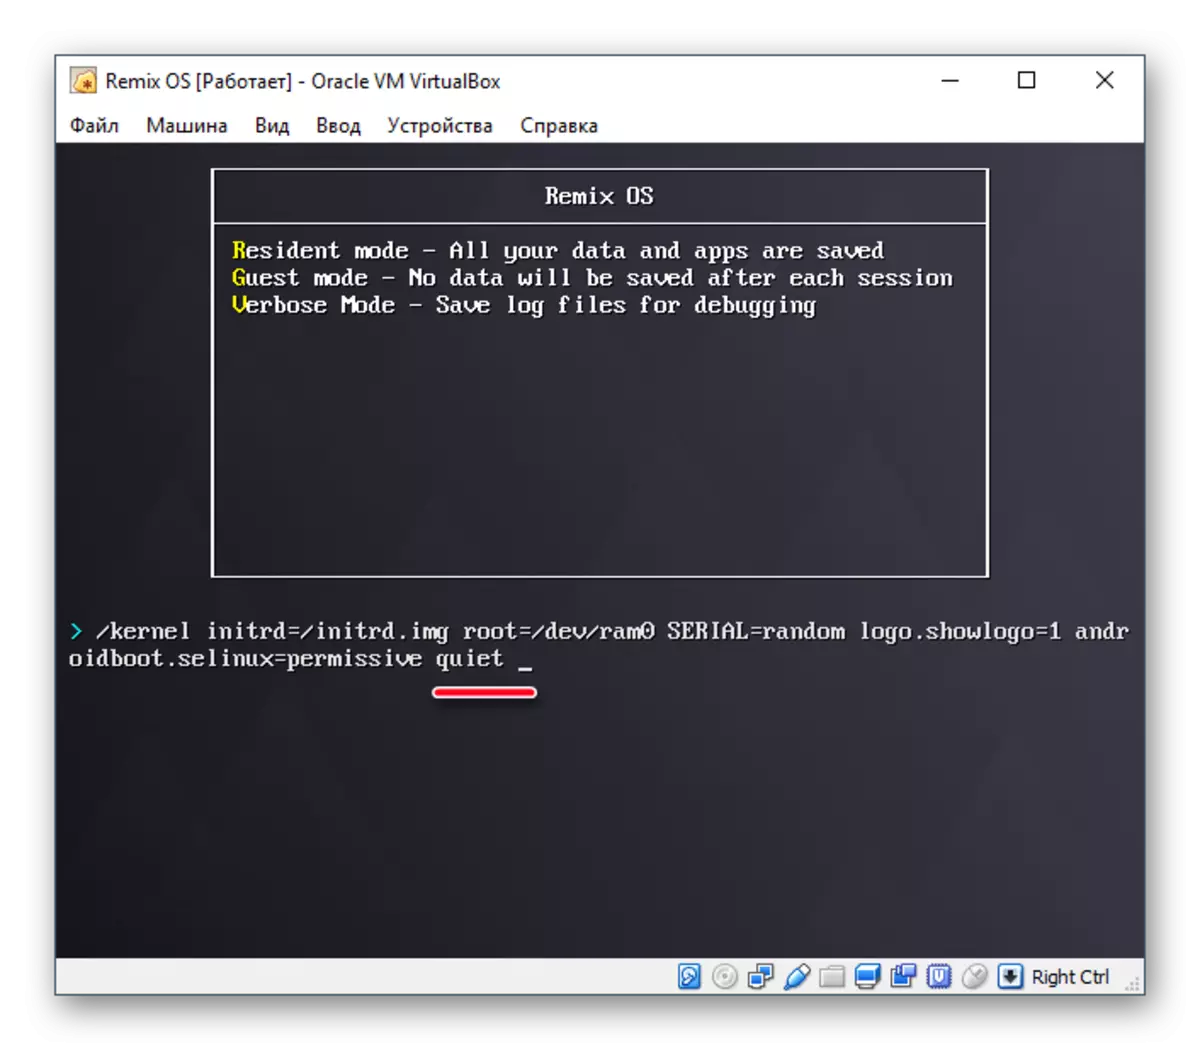 Tekst verwijderen in stille woord in het Remix OS-installatieprogramma in VirtualBox